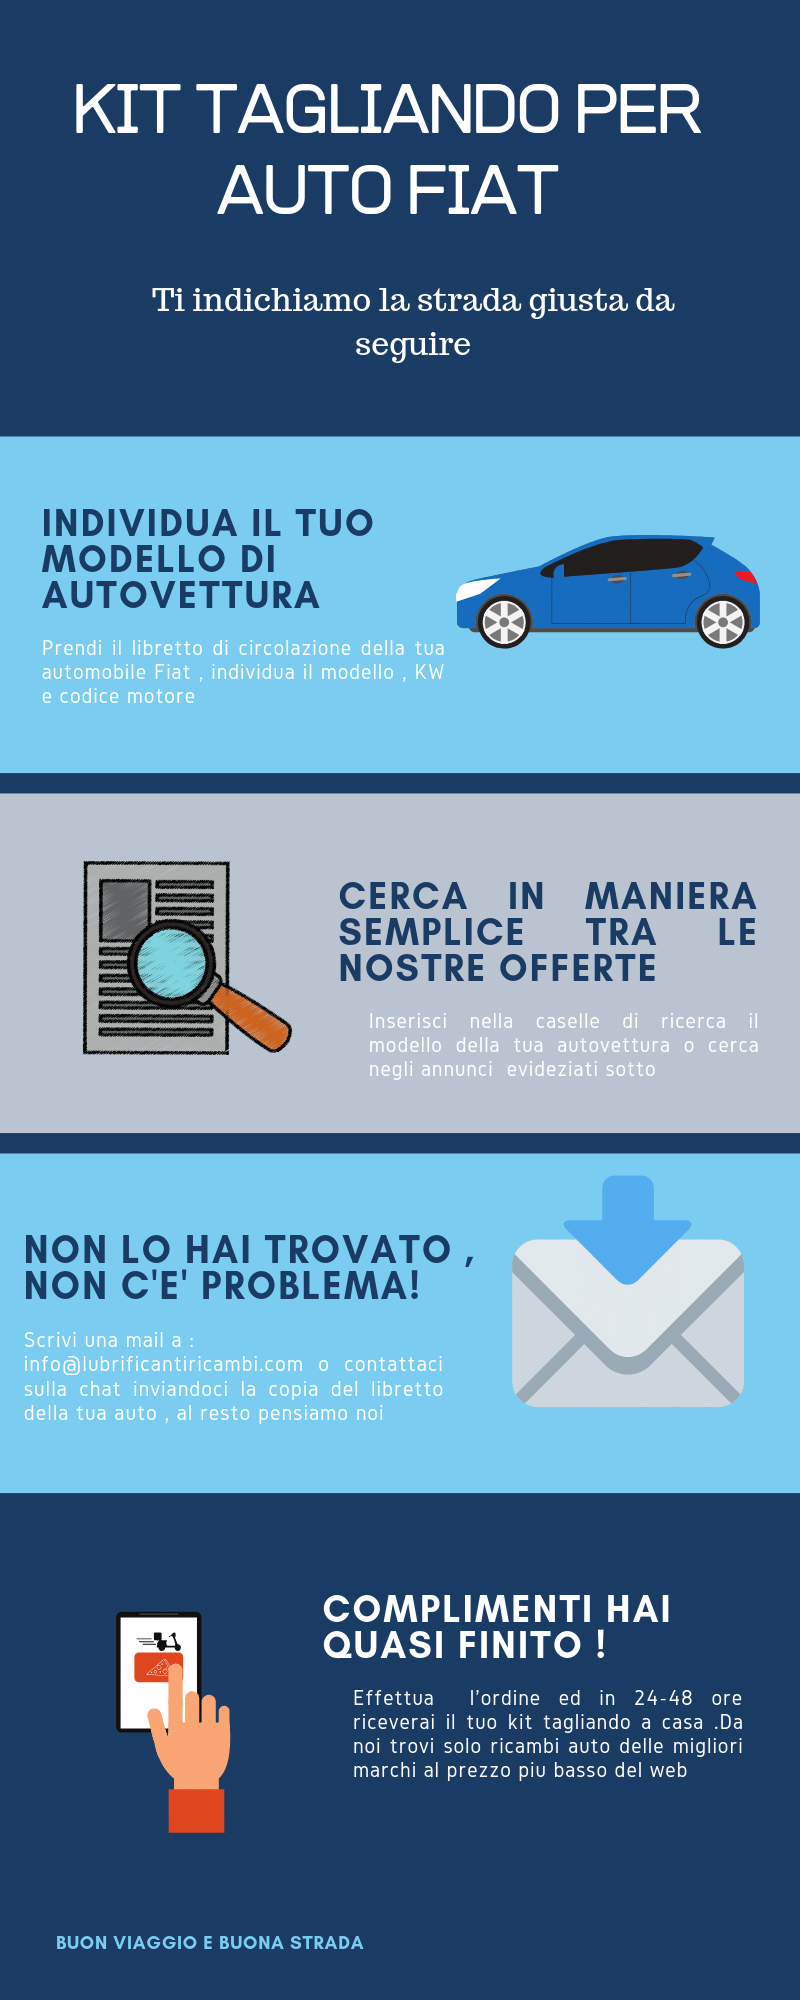 Service Kit für Fiat Cars